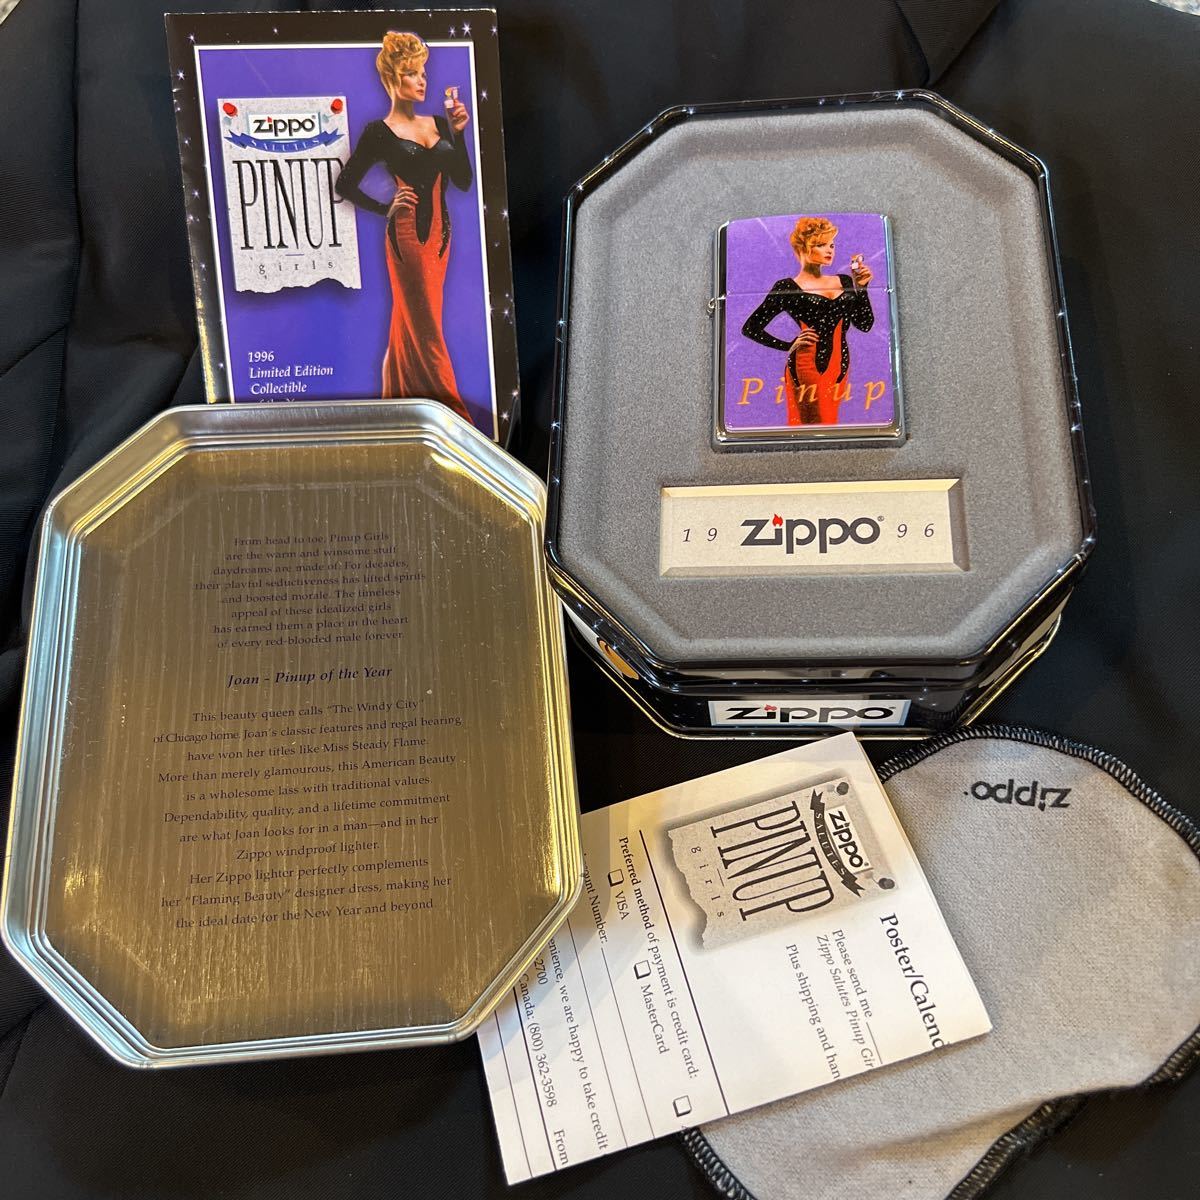 ZIPPO ジッポー 新品未使用 1996限定 ピンナップガールズコレクション 専用の缶箱付き 付属品全部有り ヤマト便送料込み